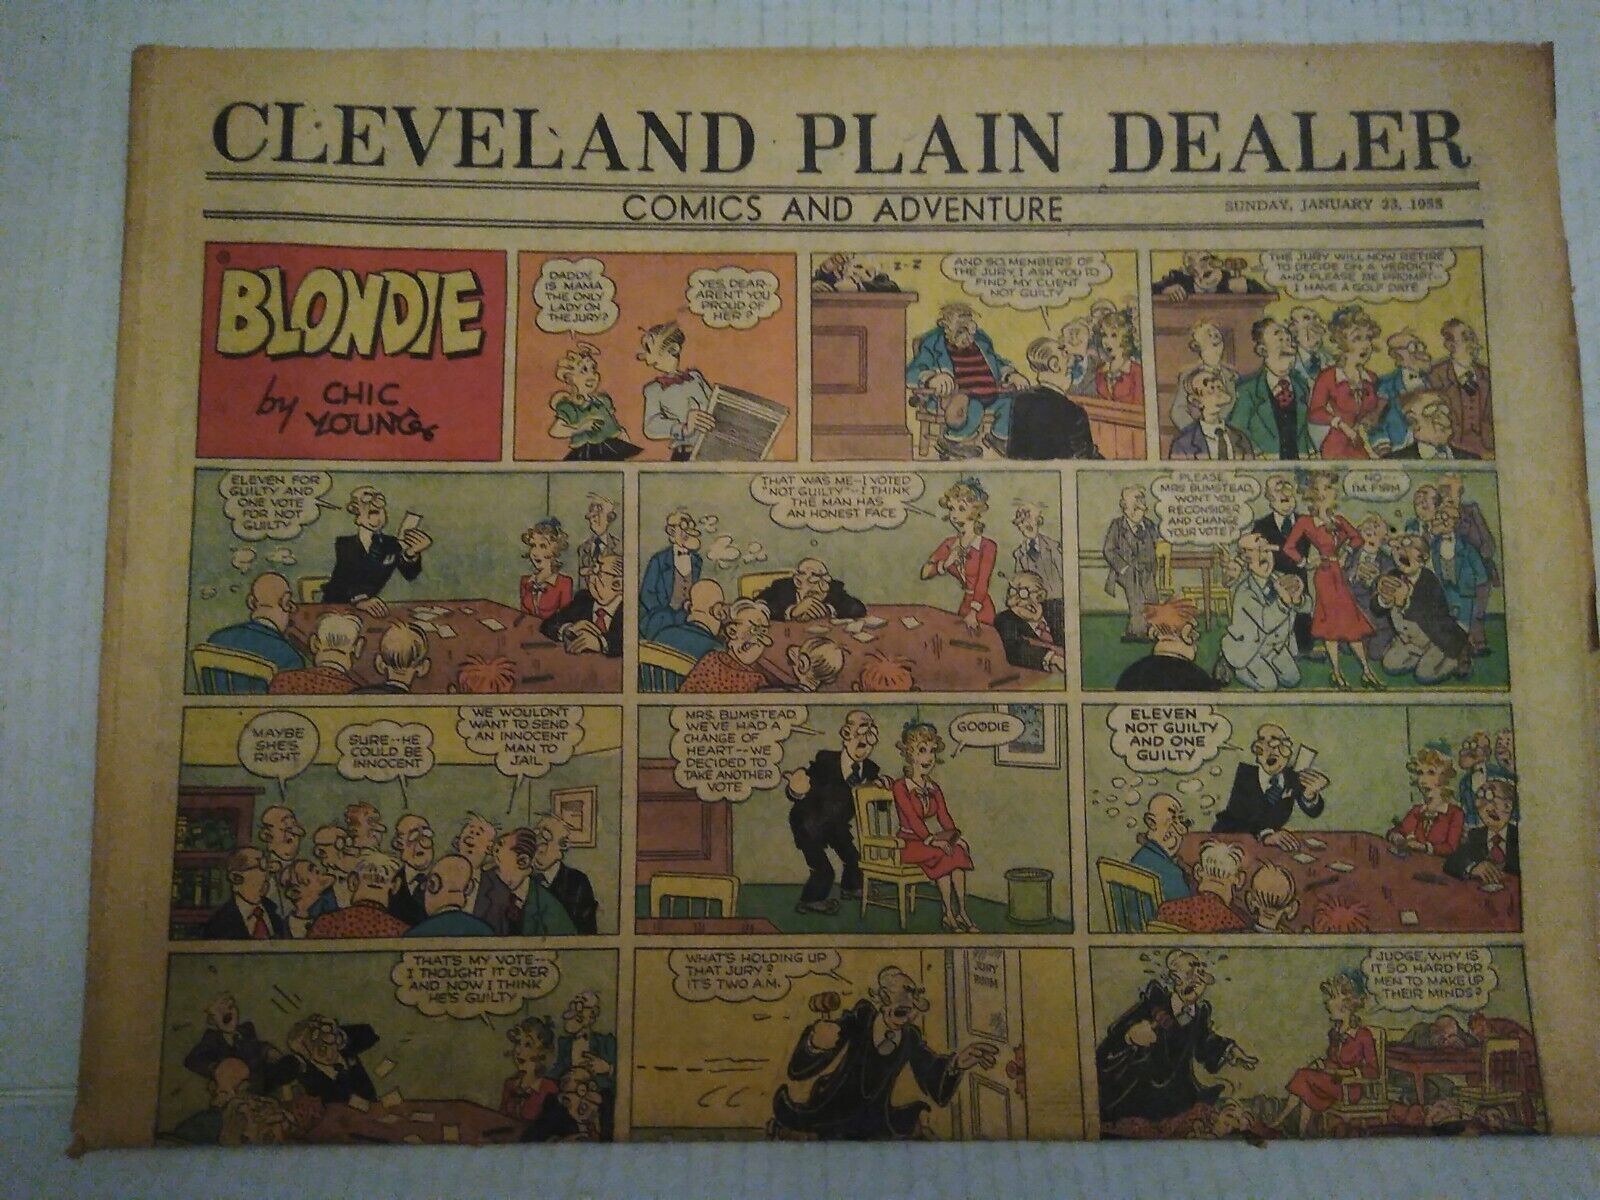 Sunday Newspaper Comic Strips  Sunday, January 23, 1955 (Cleveland Plain Dealer)